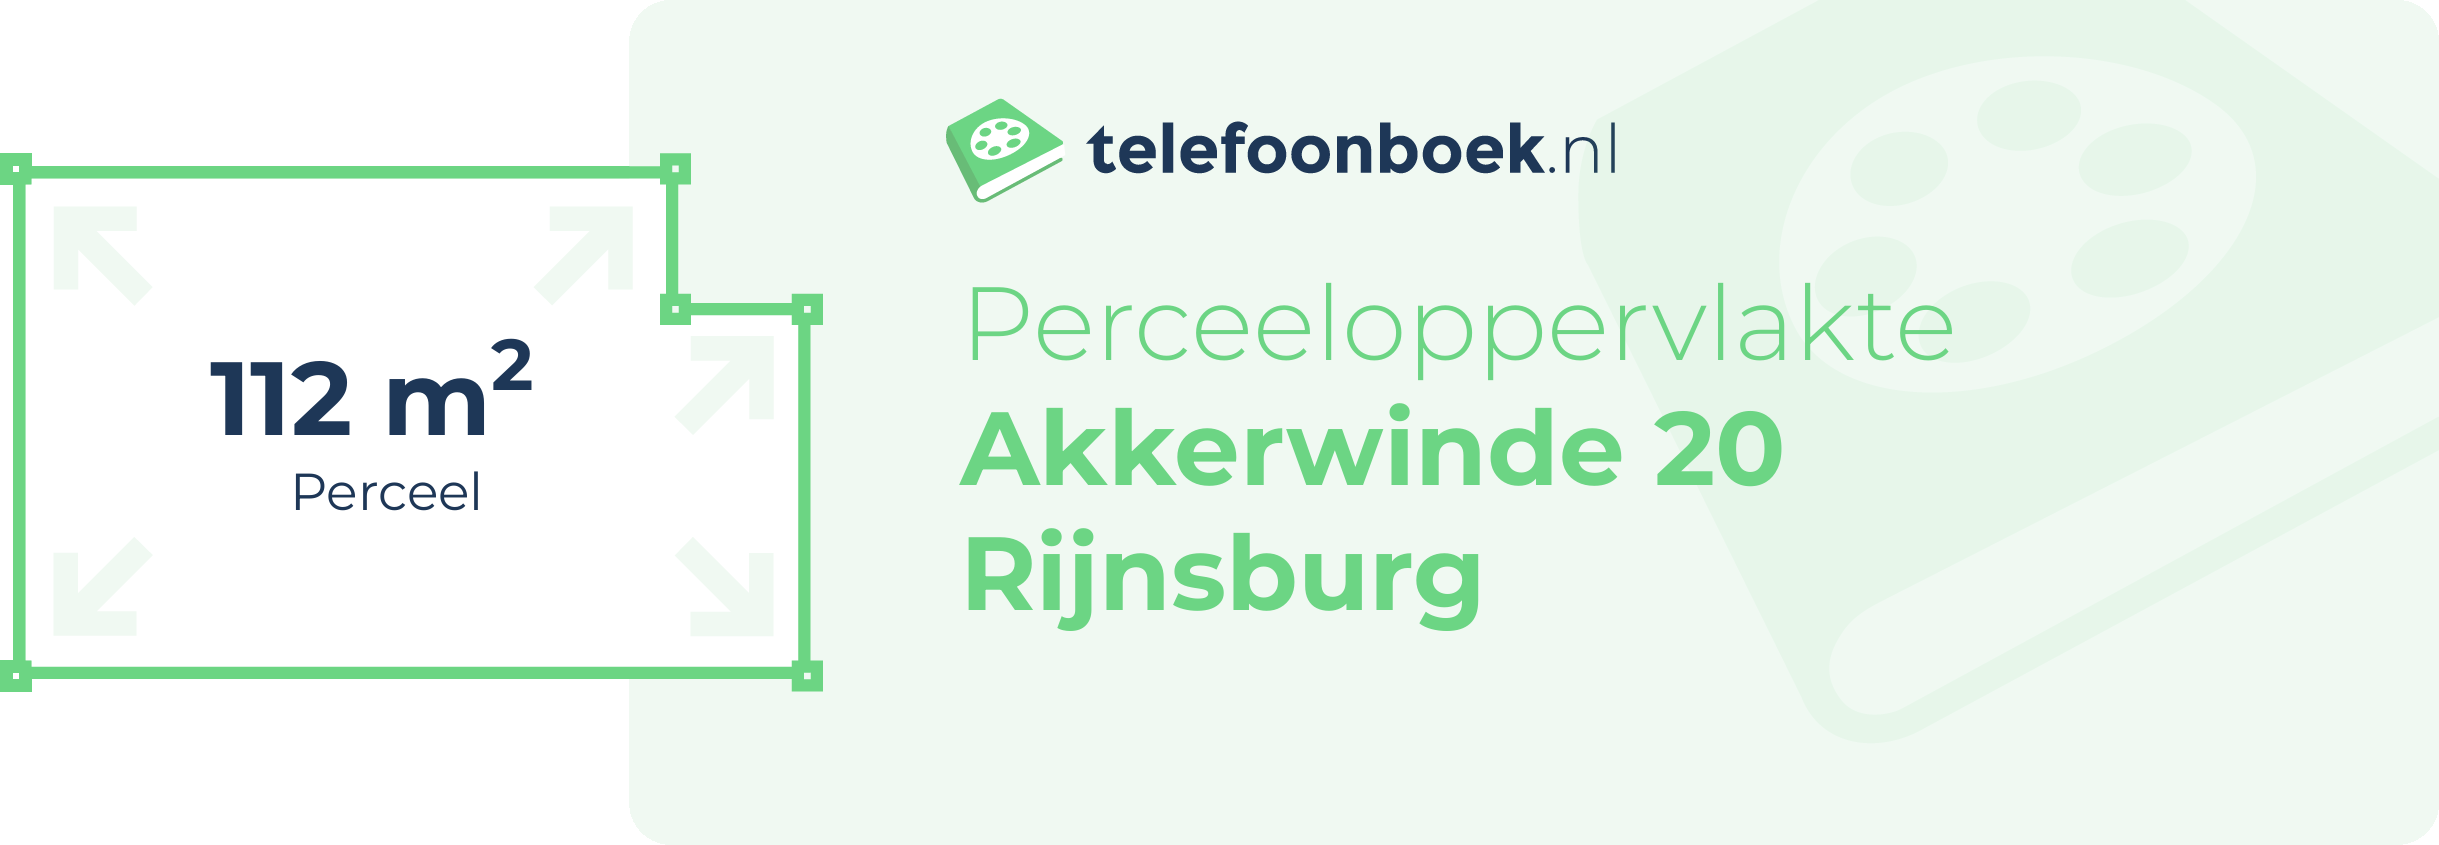 Perceeloppervlakte Akkerwinde 20 Rijnsburg